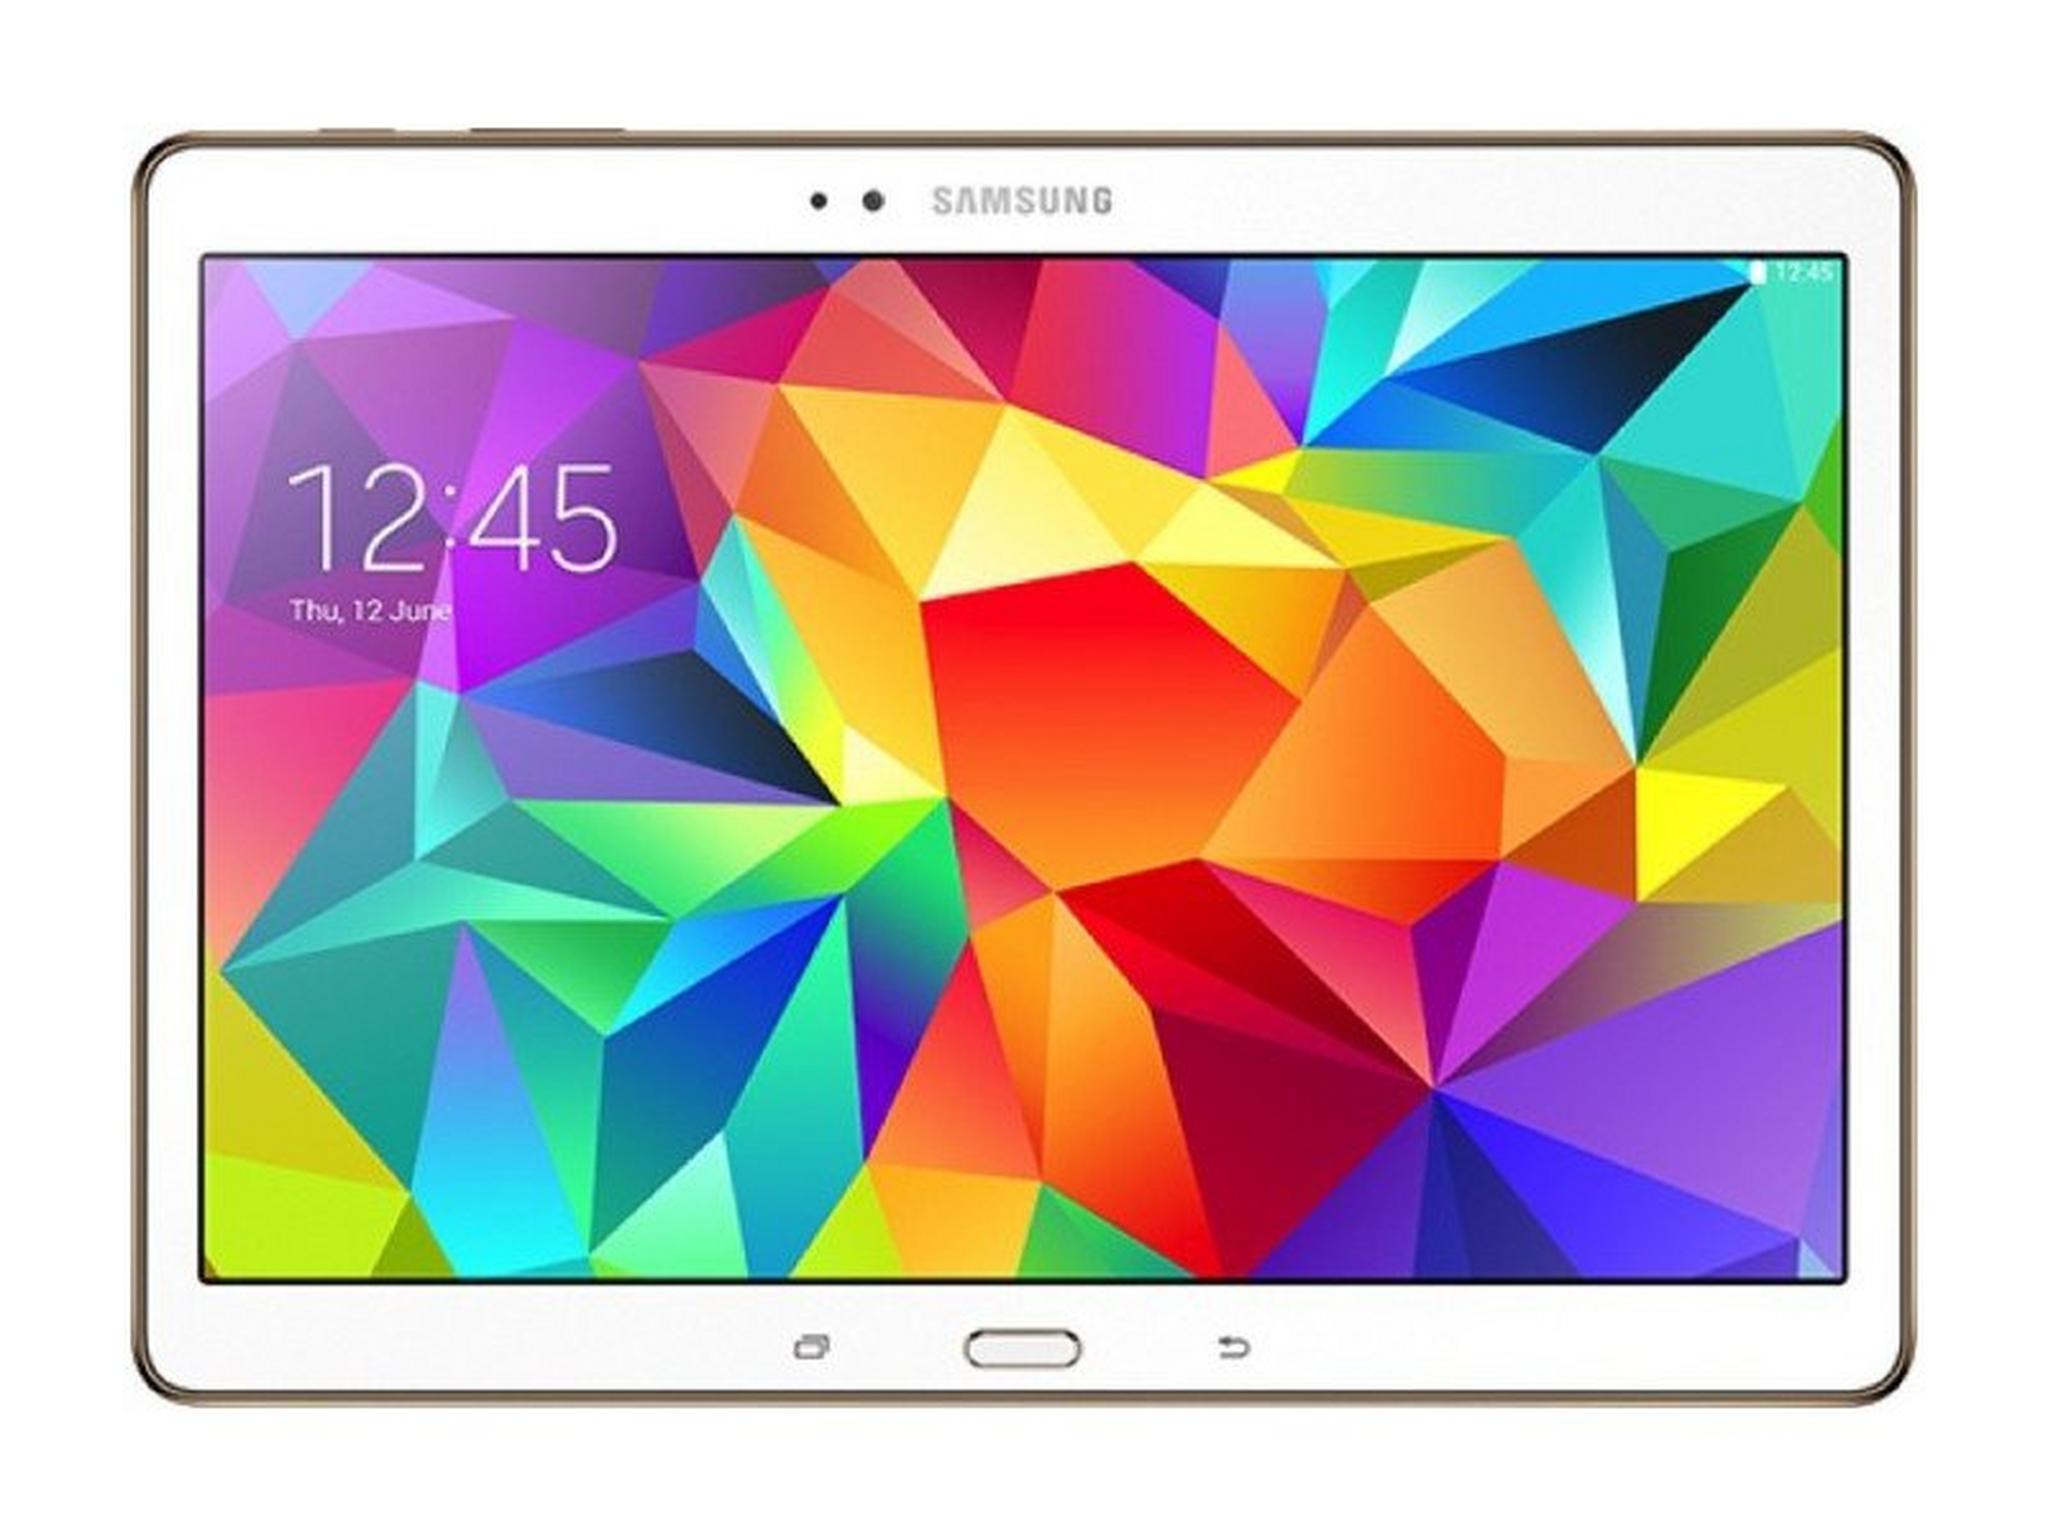 Samsung Galaxy Tab S T8050 16GB 8MP (4G/Call) 10.5-inch Tablet - White